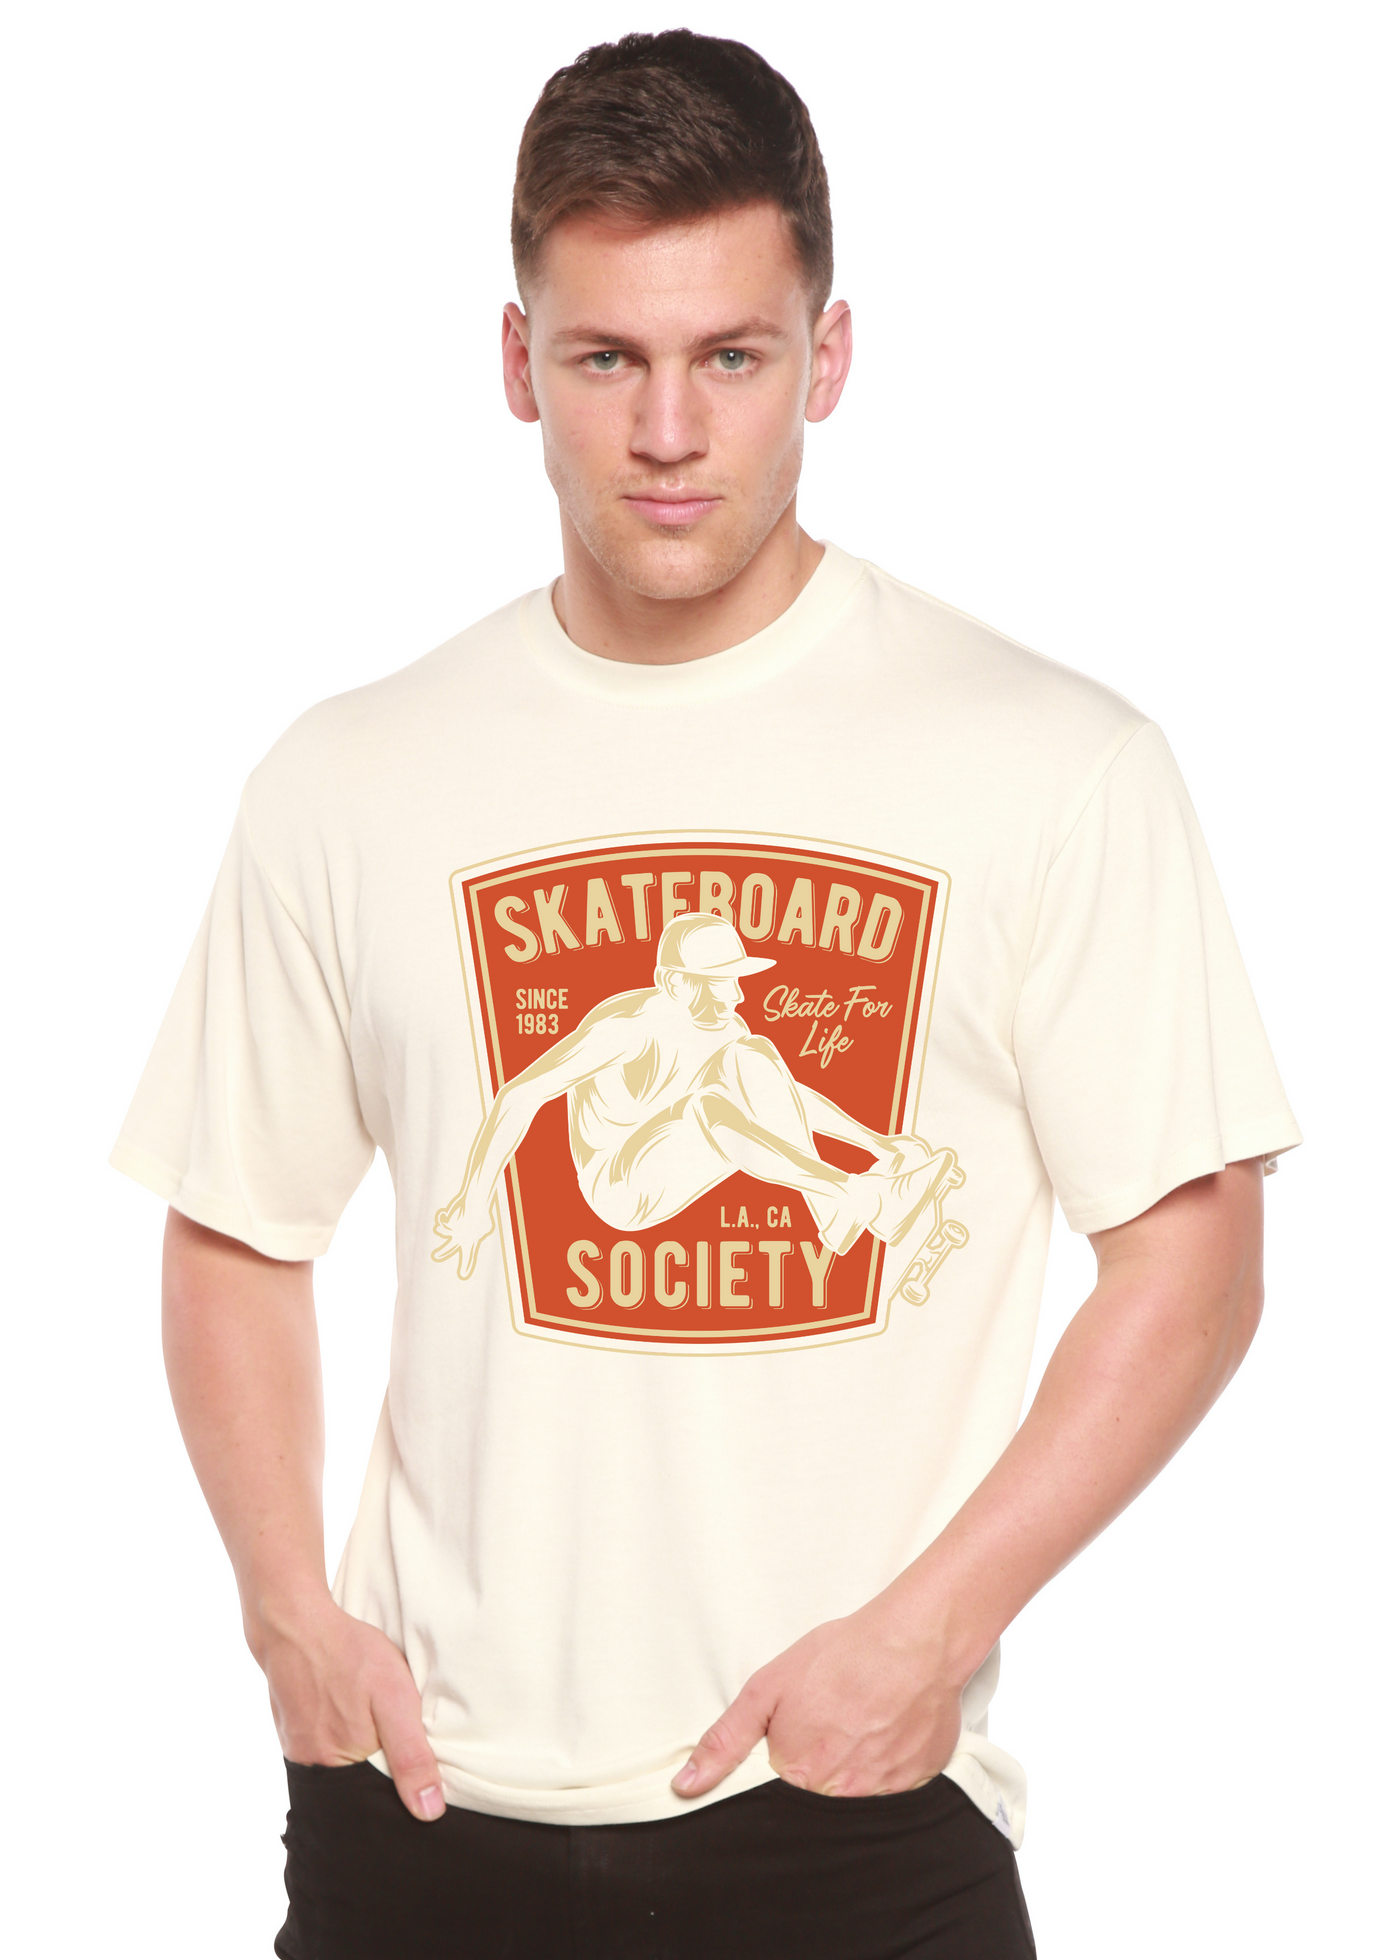 Skateboard Society men's bamboo tshirt white